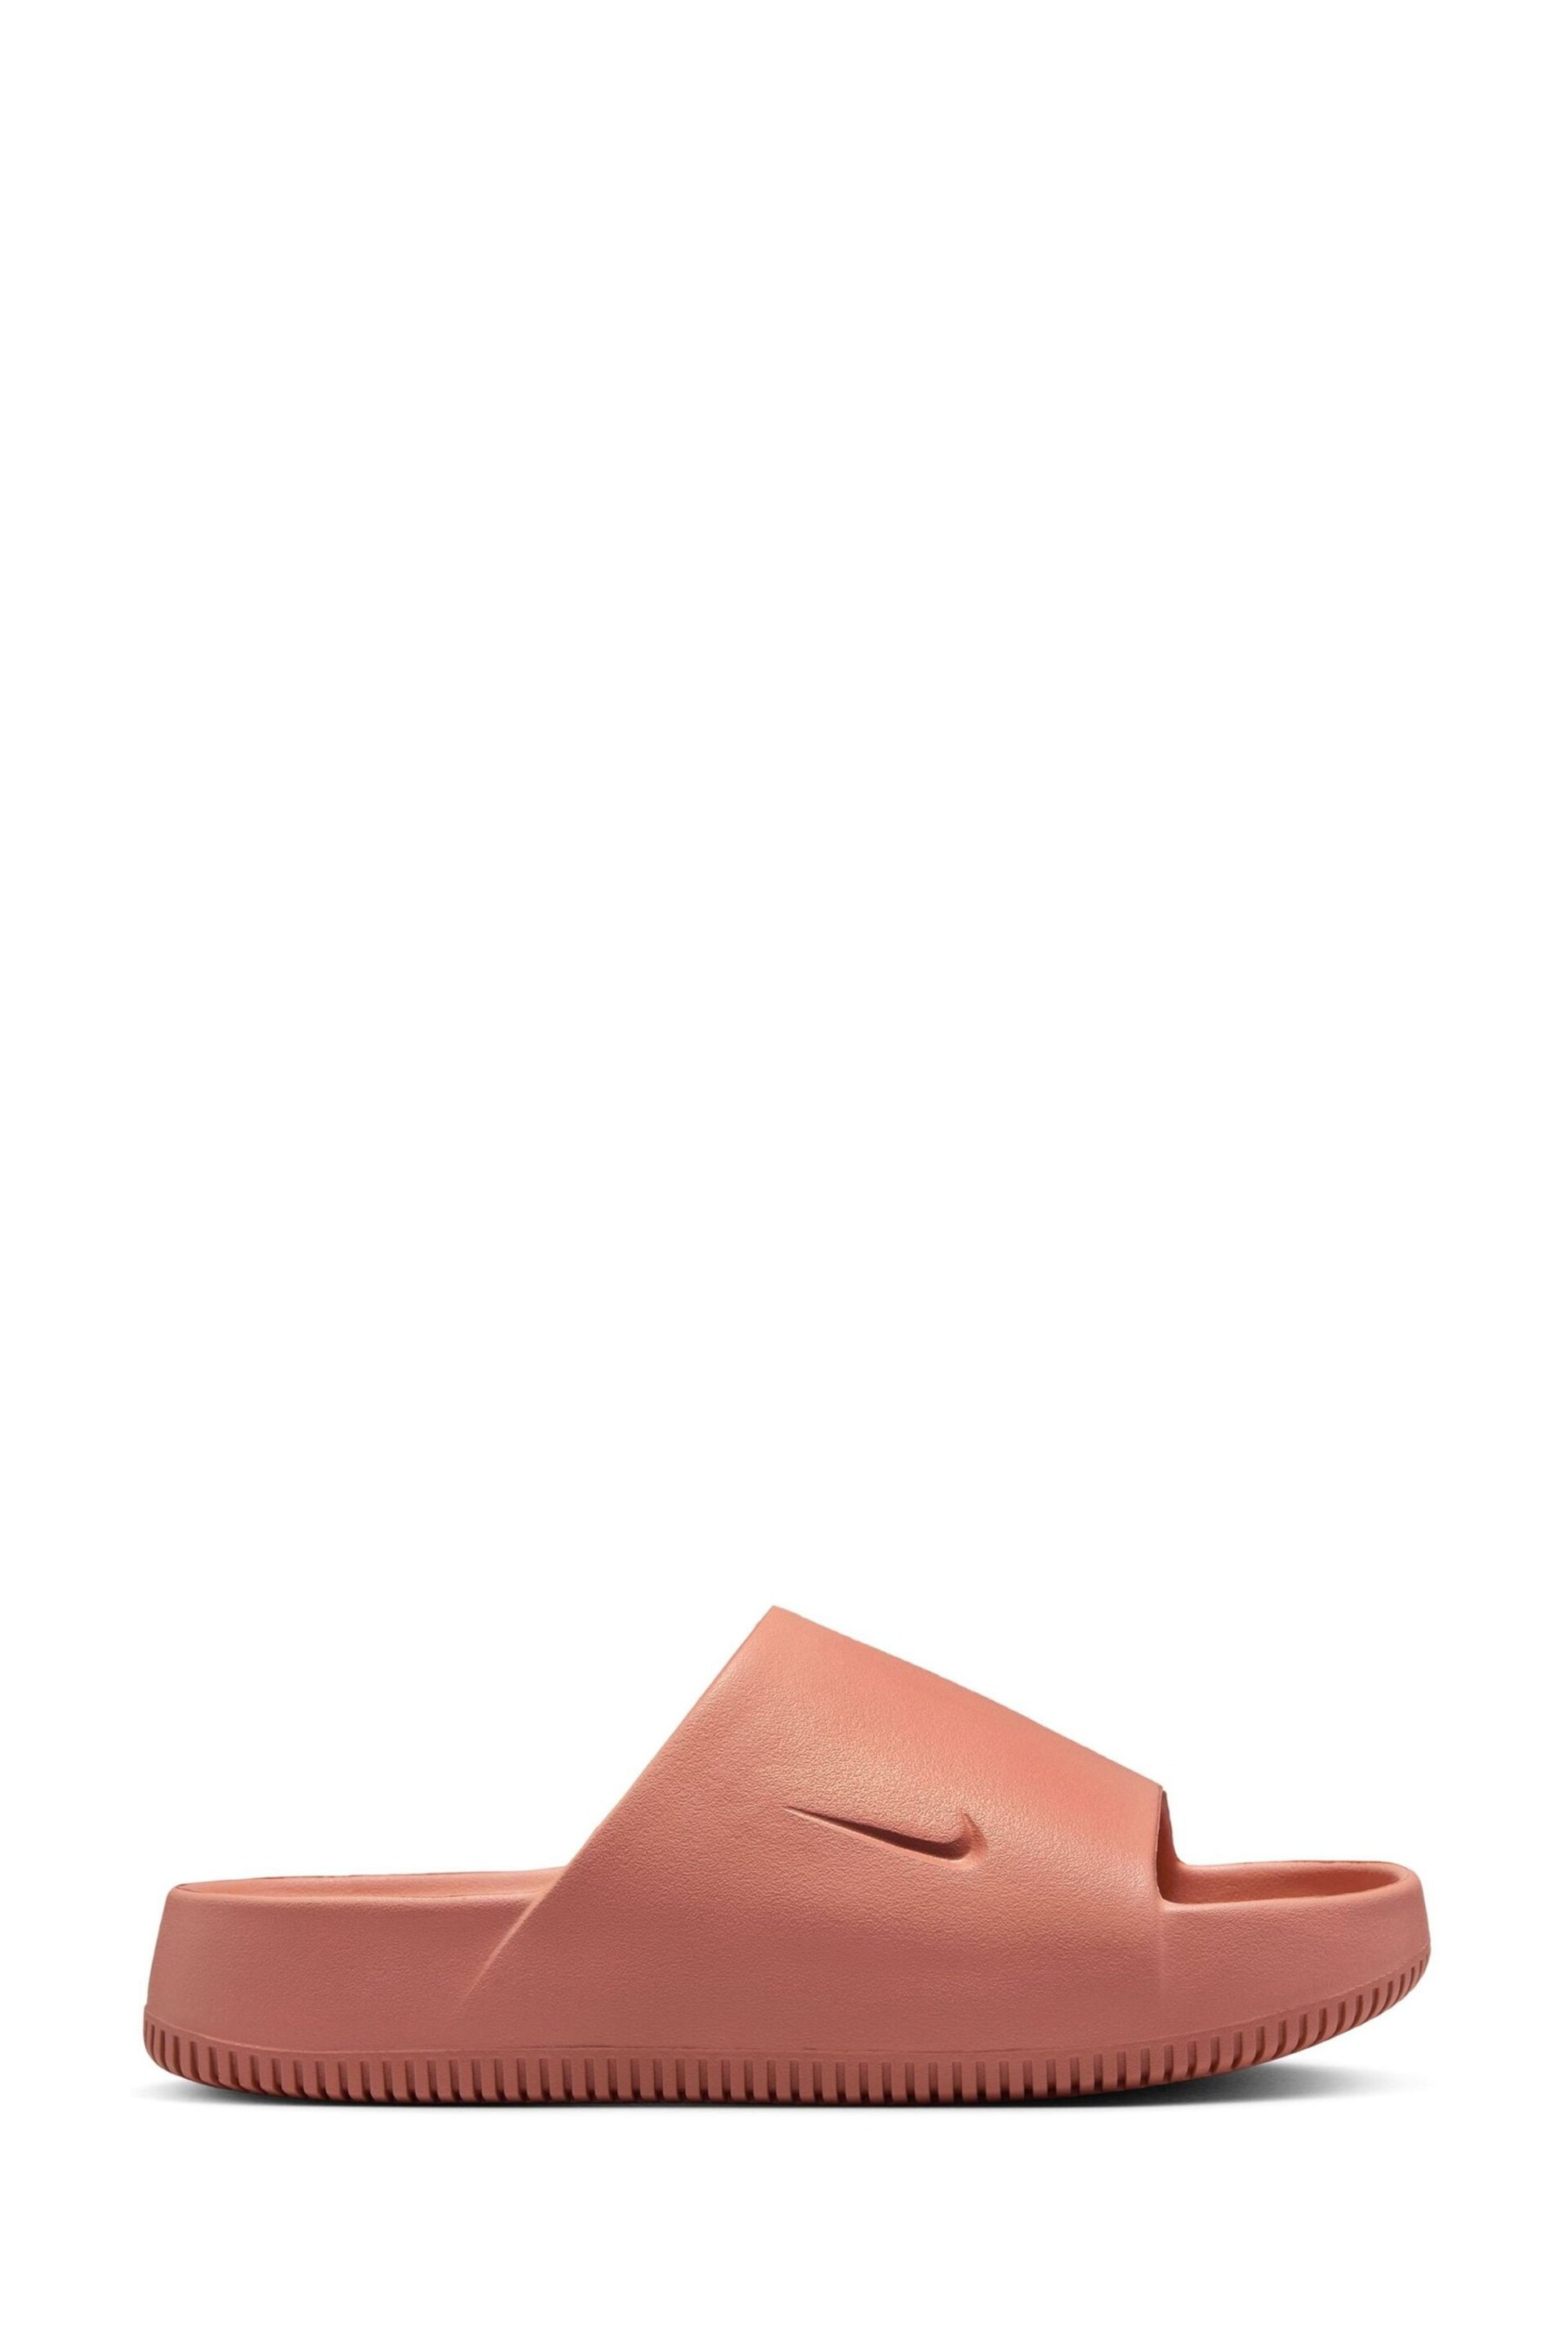 Nike Brown Calm Sliders - Image 1 of 6